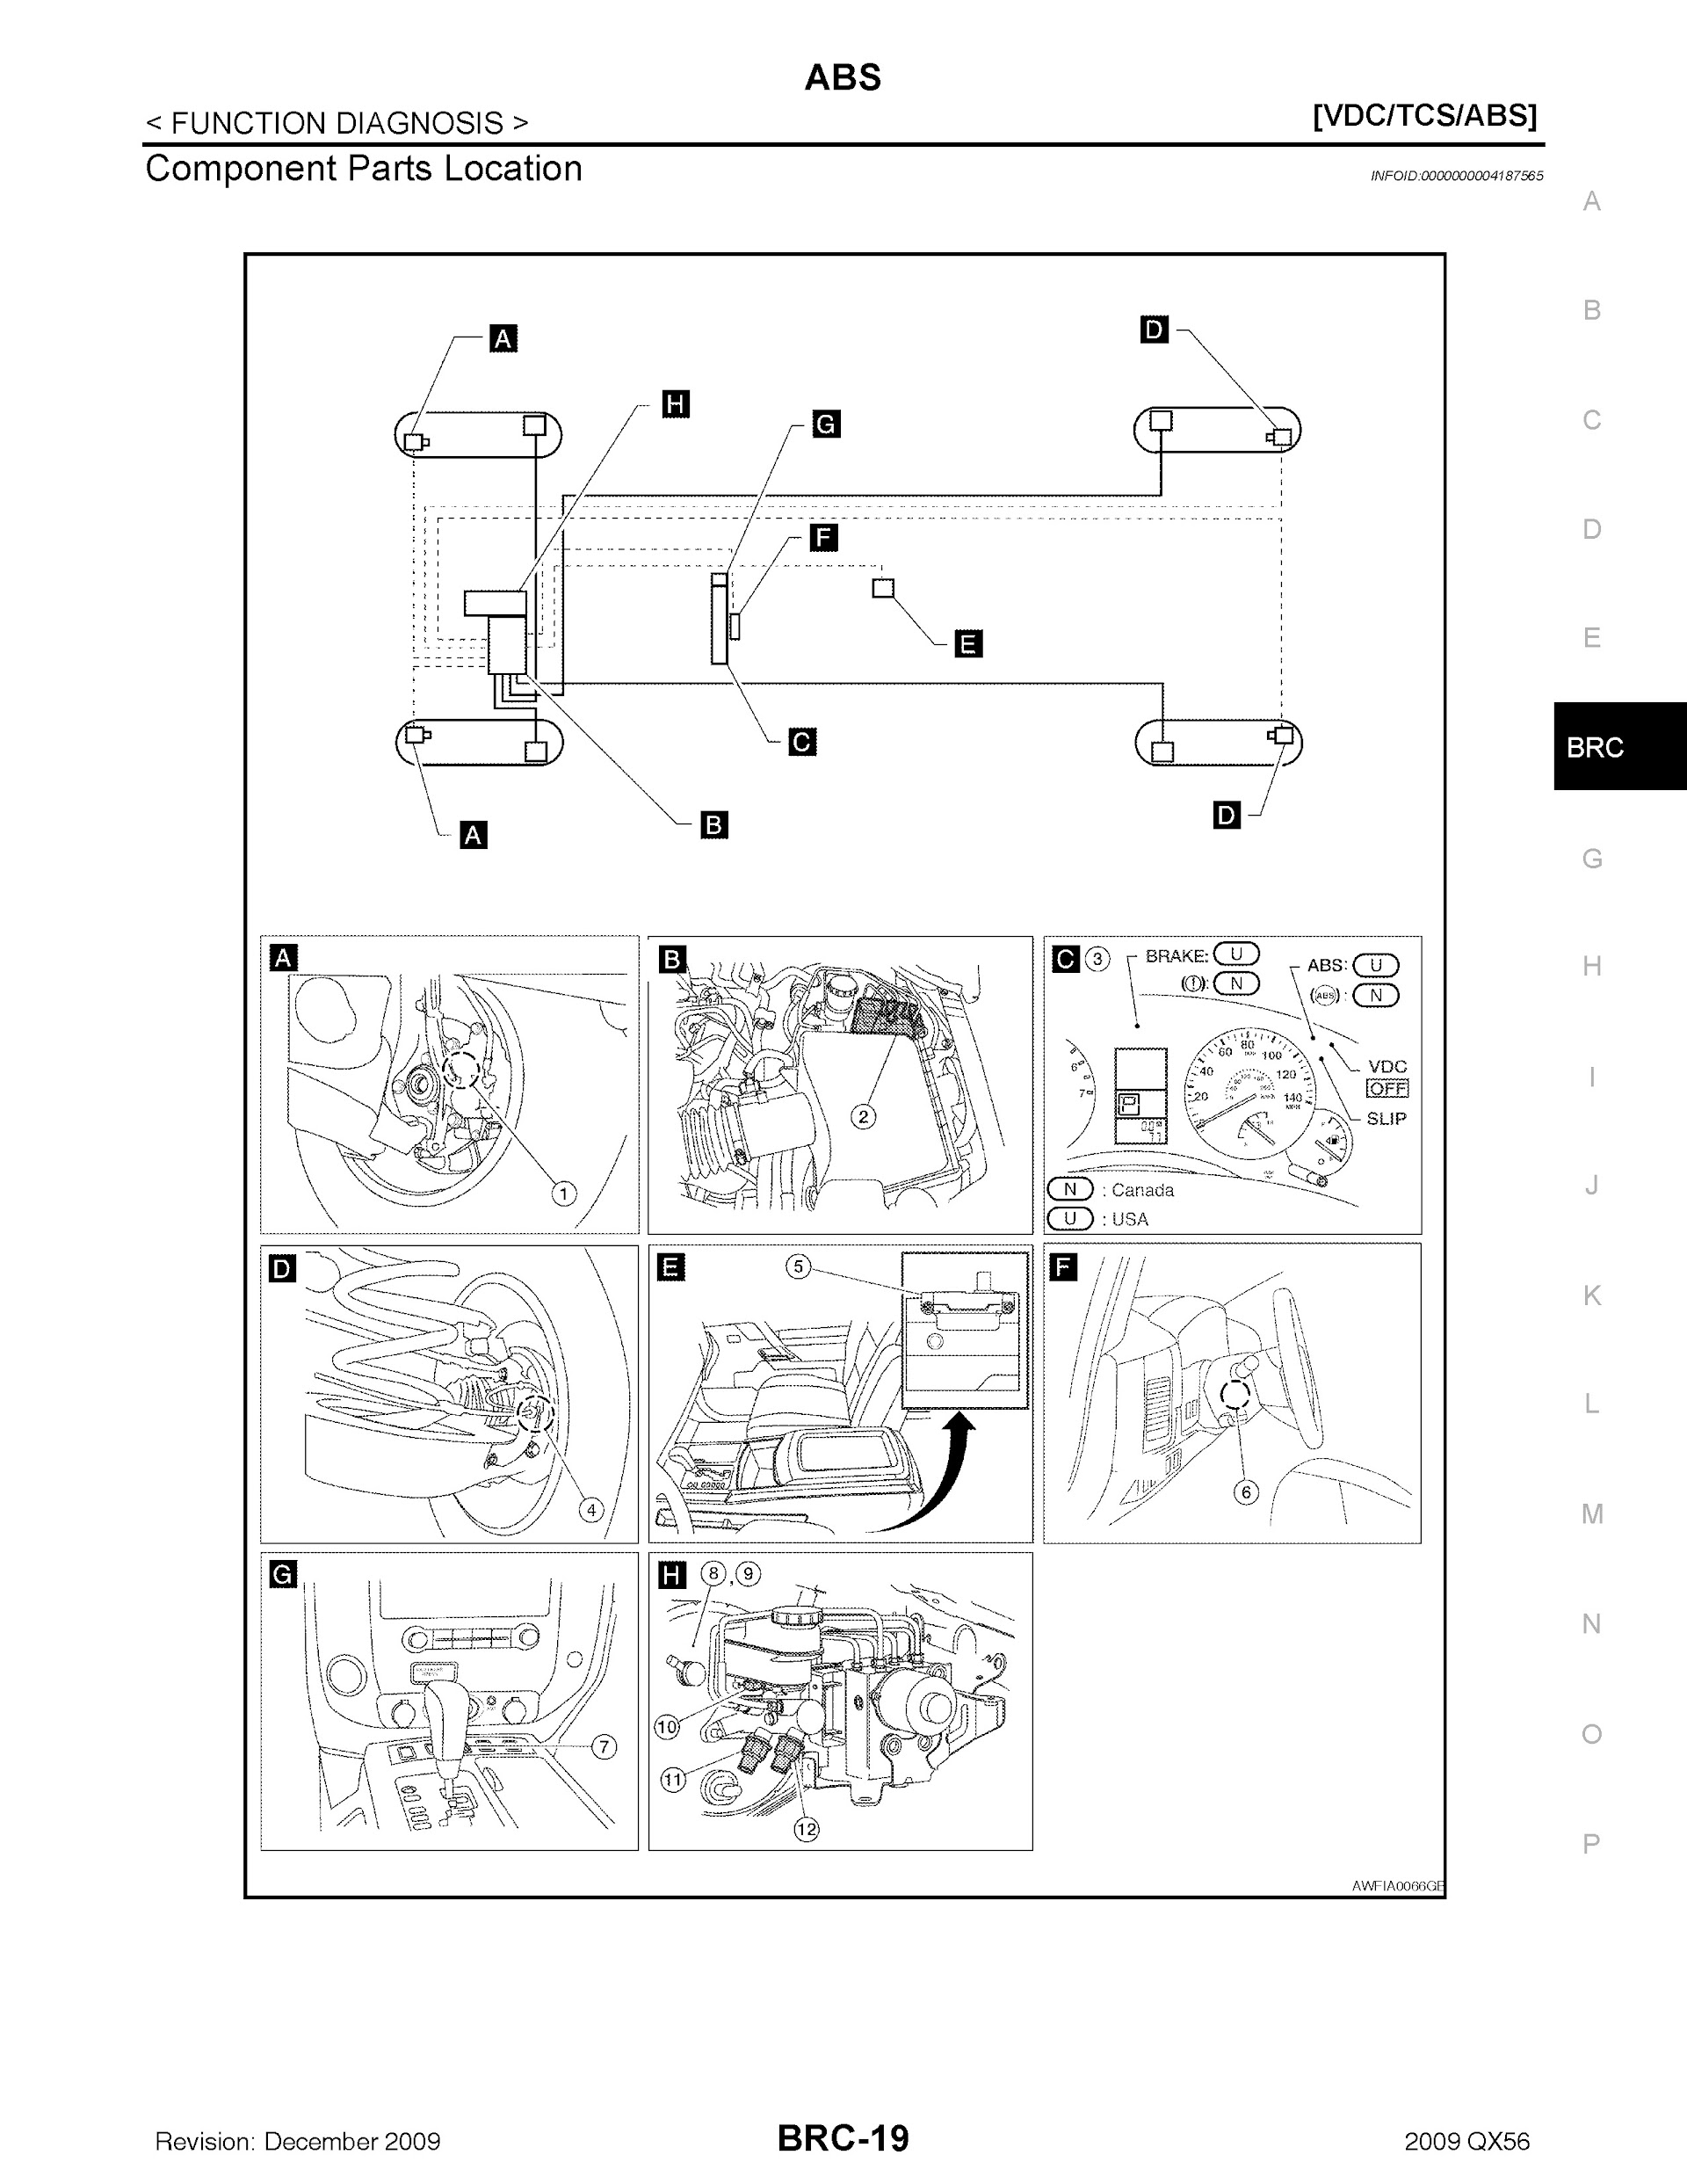 2009 Infiniti QX56 Repair Manual, ABS components parts location